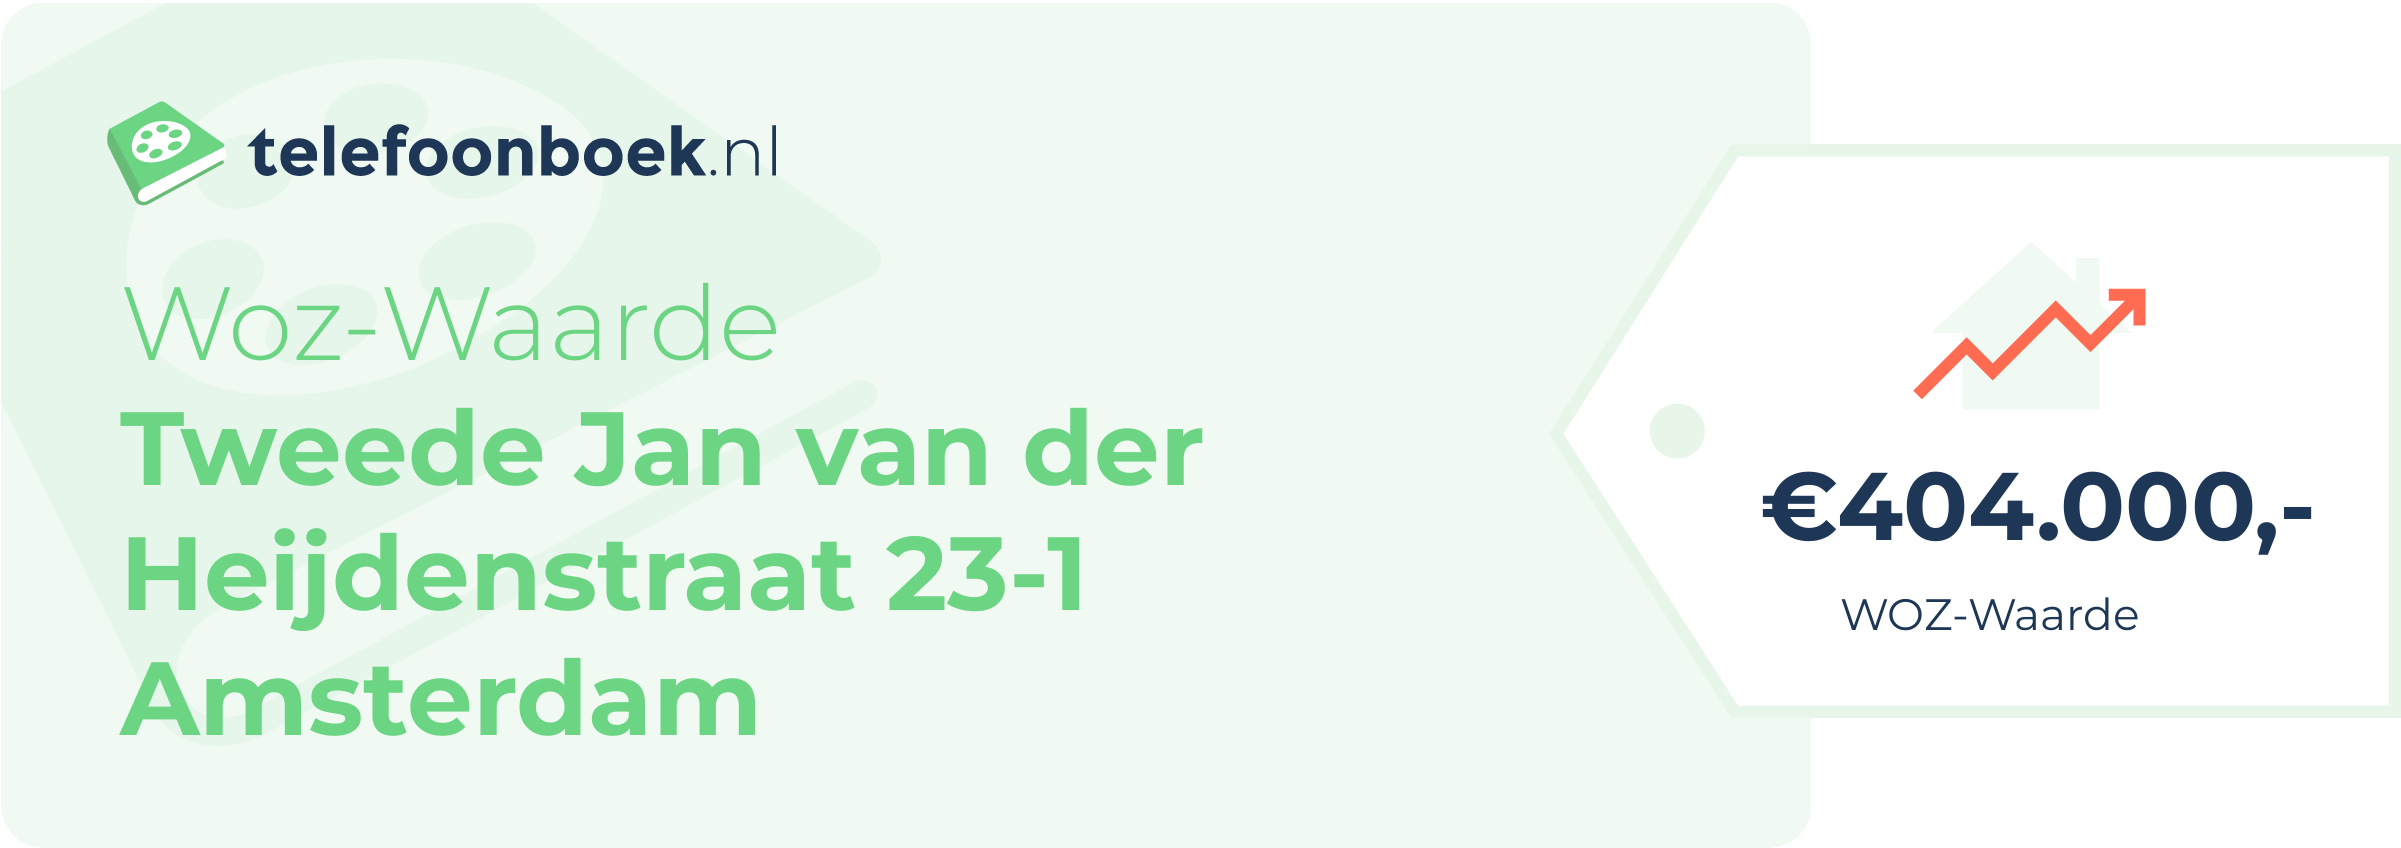 WOZ-waarde Tweede Jan Van Der Heijdenstraat 23-1 Amsterdam